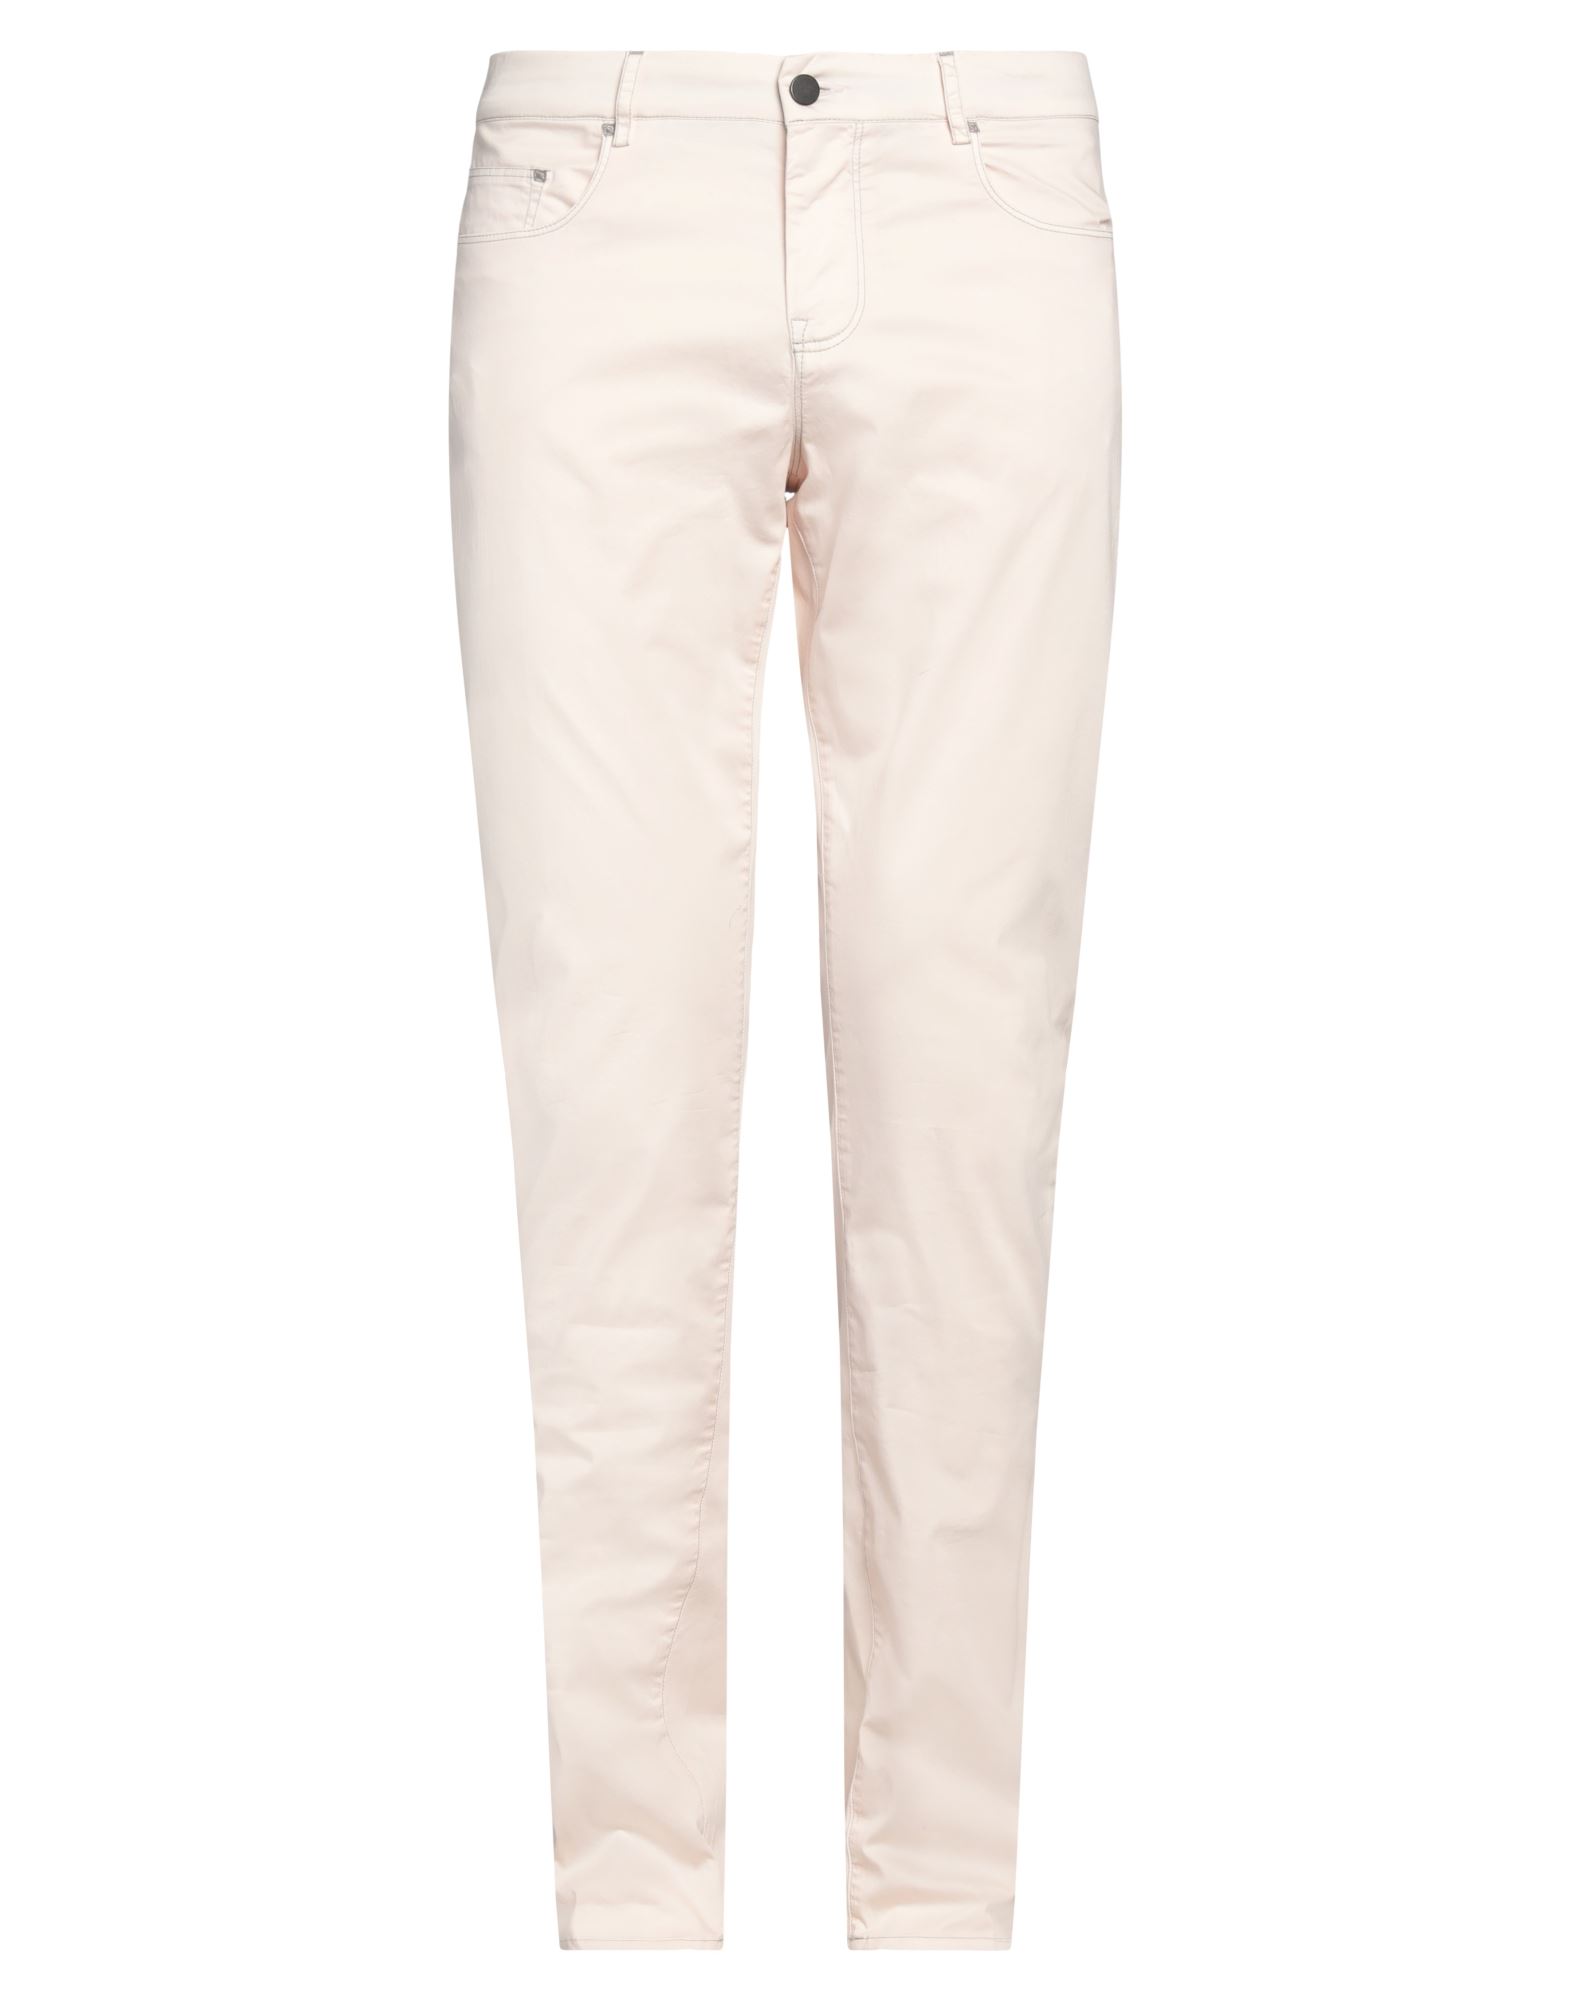 Panama Pants In White